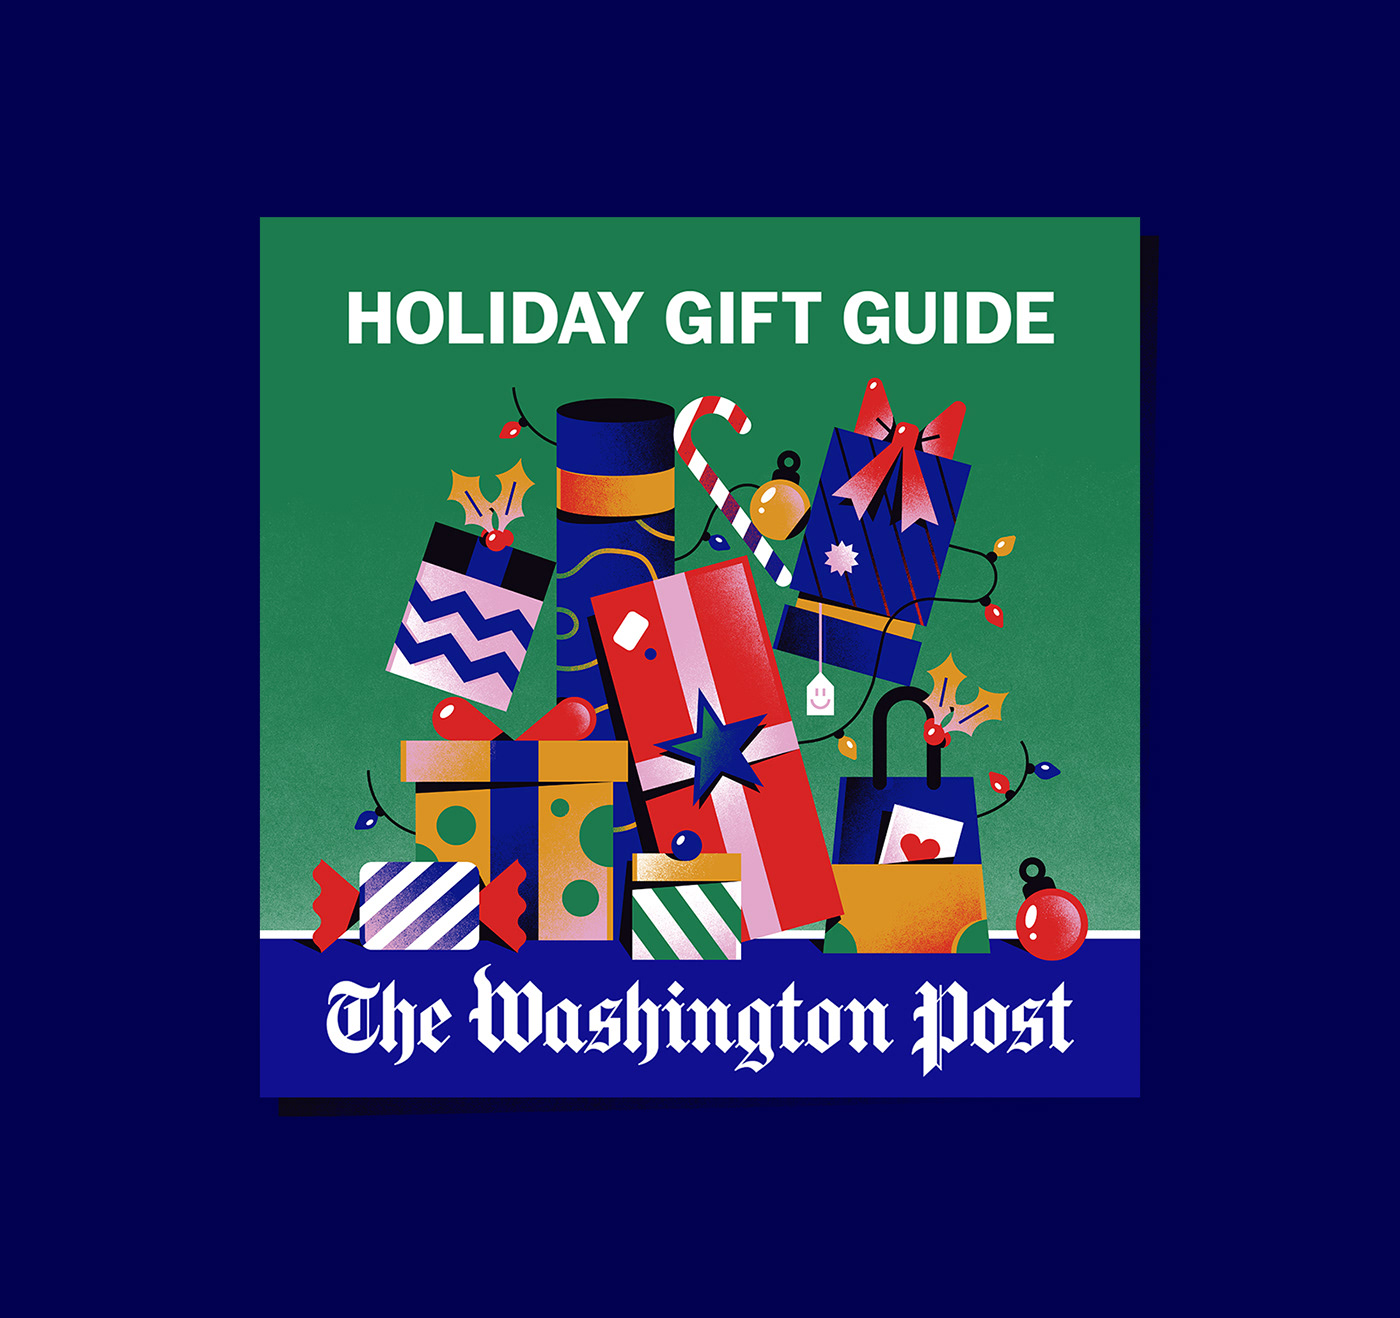 xmas Christmas Holiday Season winter present gift the washington post newspaper Editorial Illustration journal